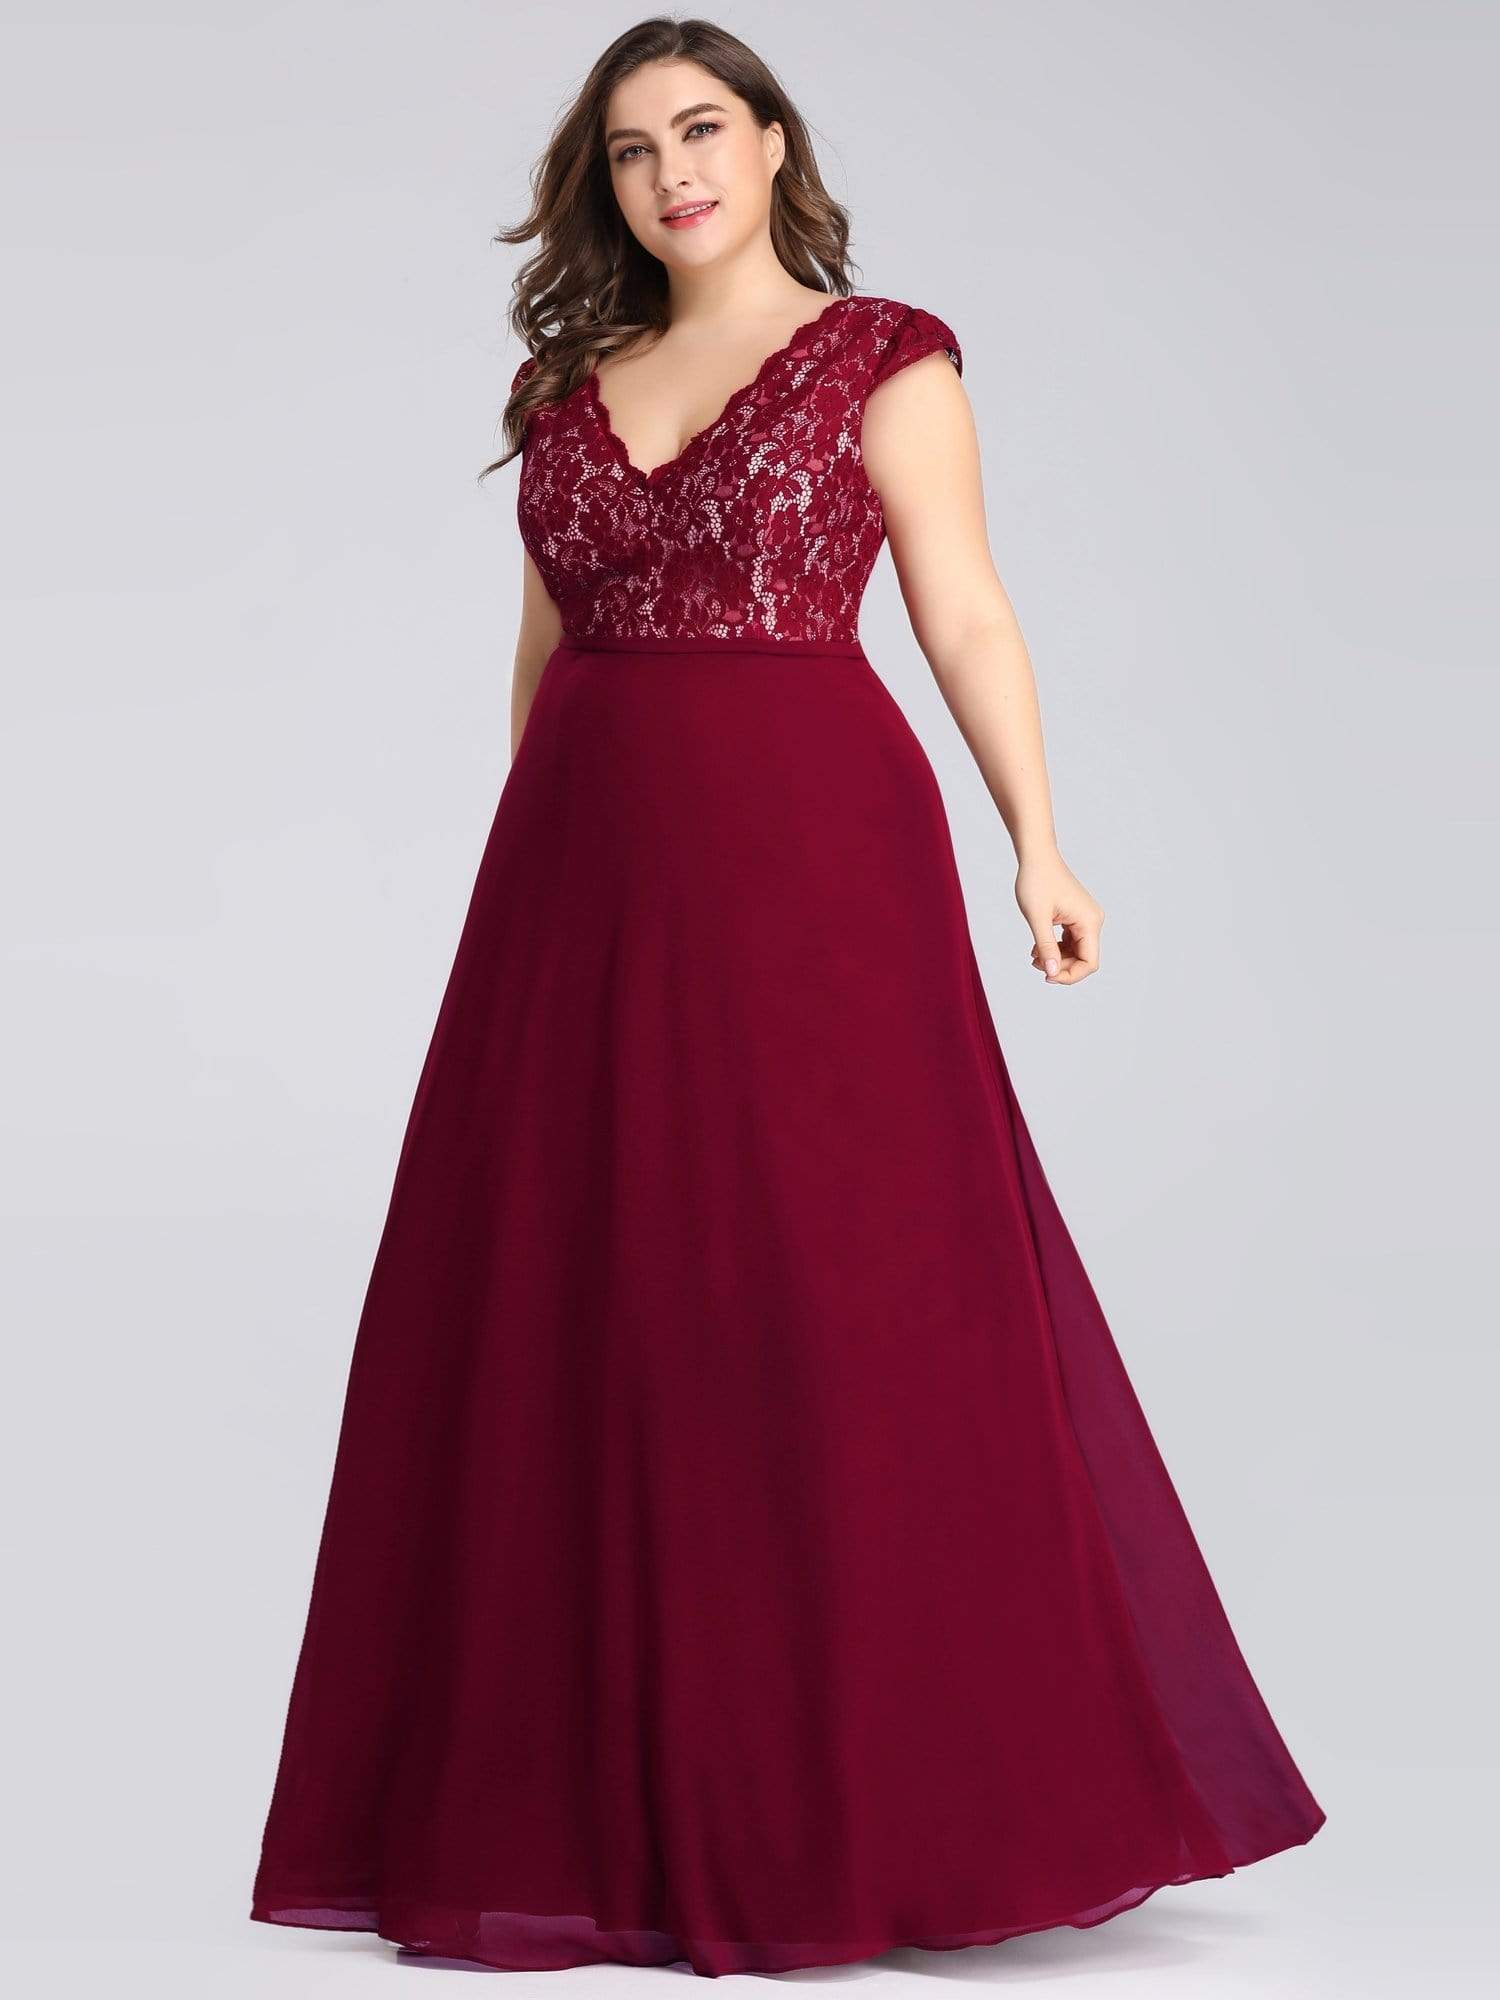 Intricate Beading on Net Evening Dress | Style 71416 | Morilee